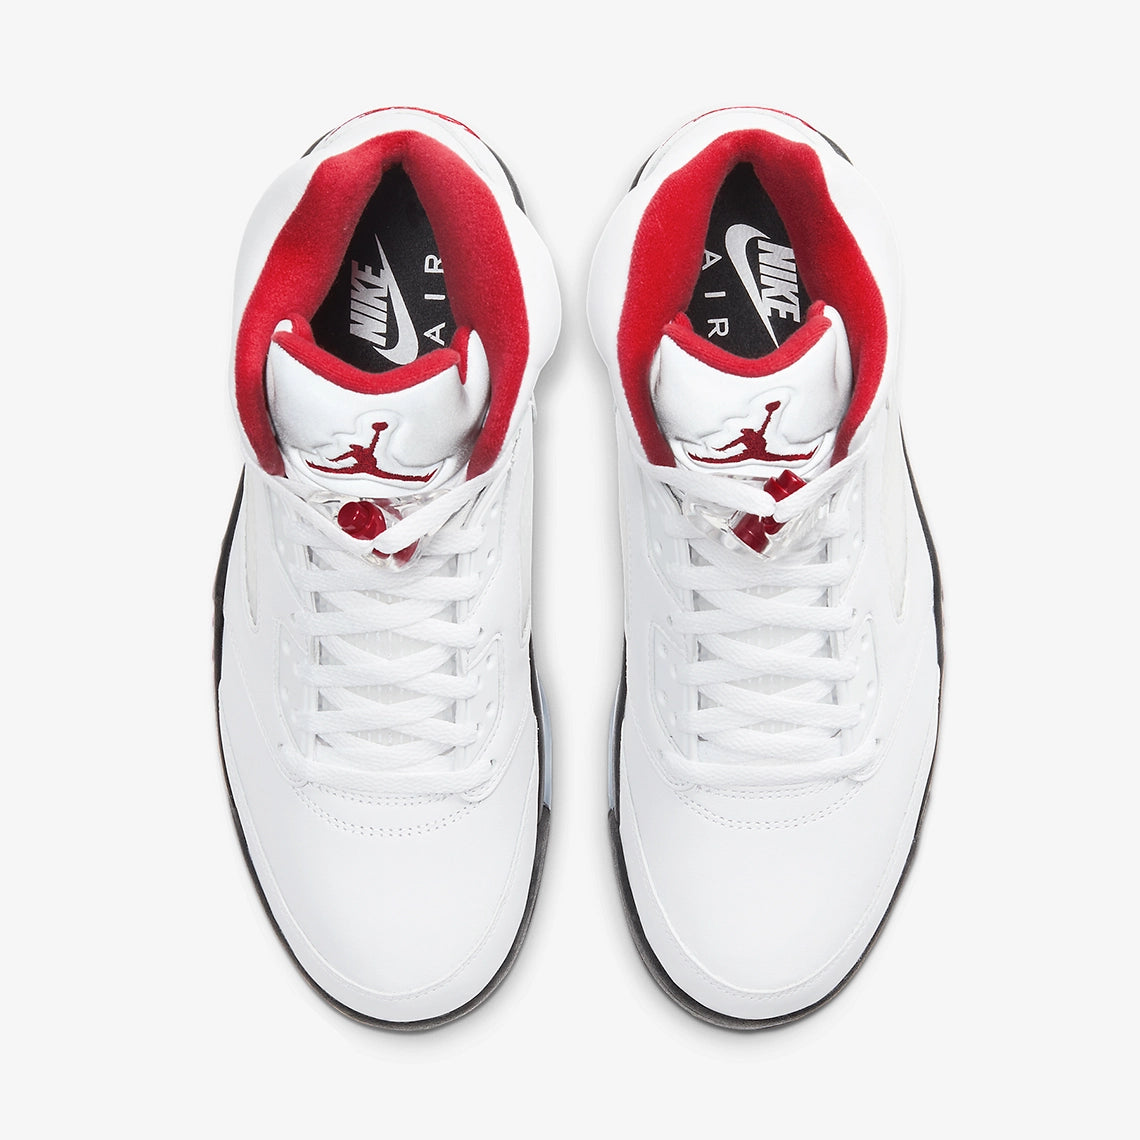 公式限定Nike Air jordan 5 FIRE RED 27.5㎝ 新品 流川 スニーカー